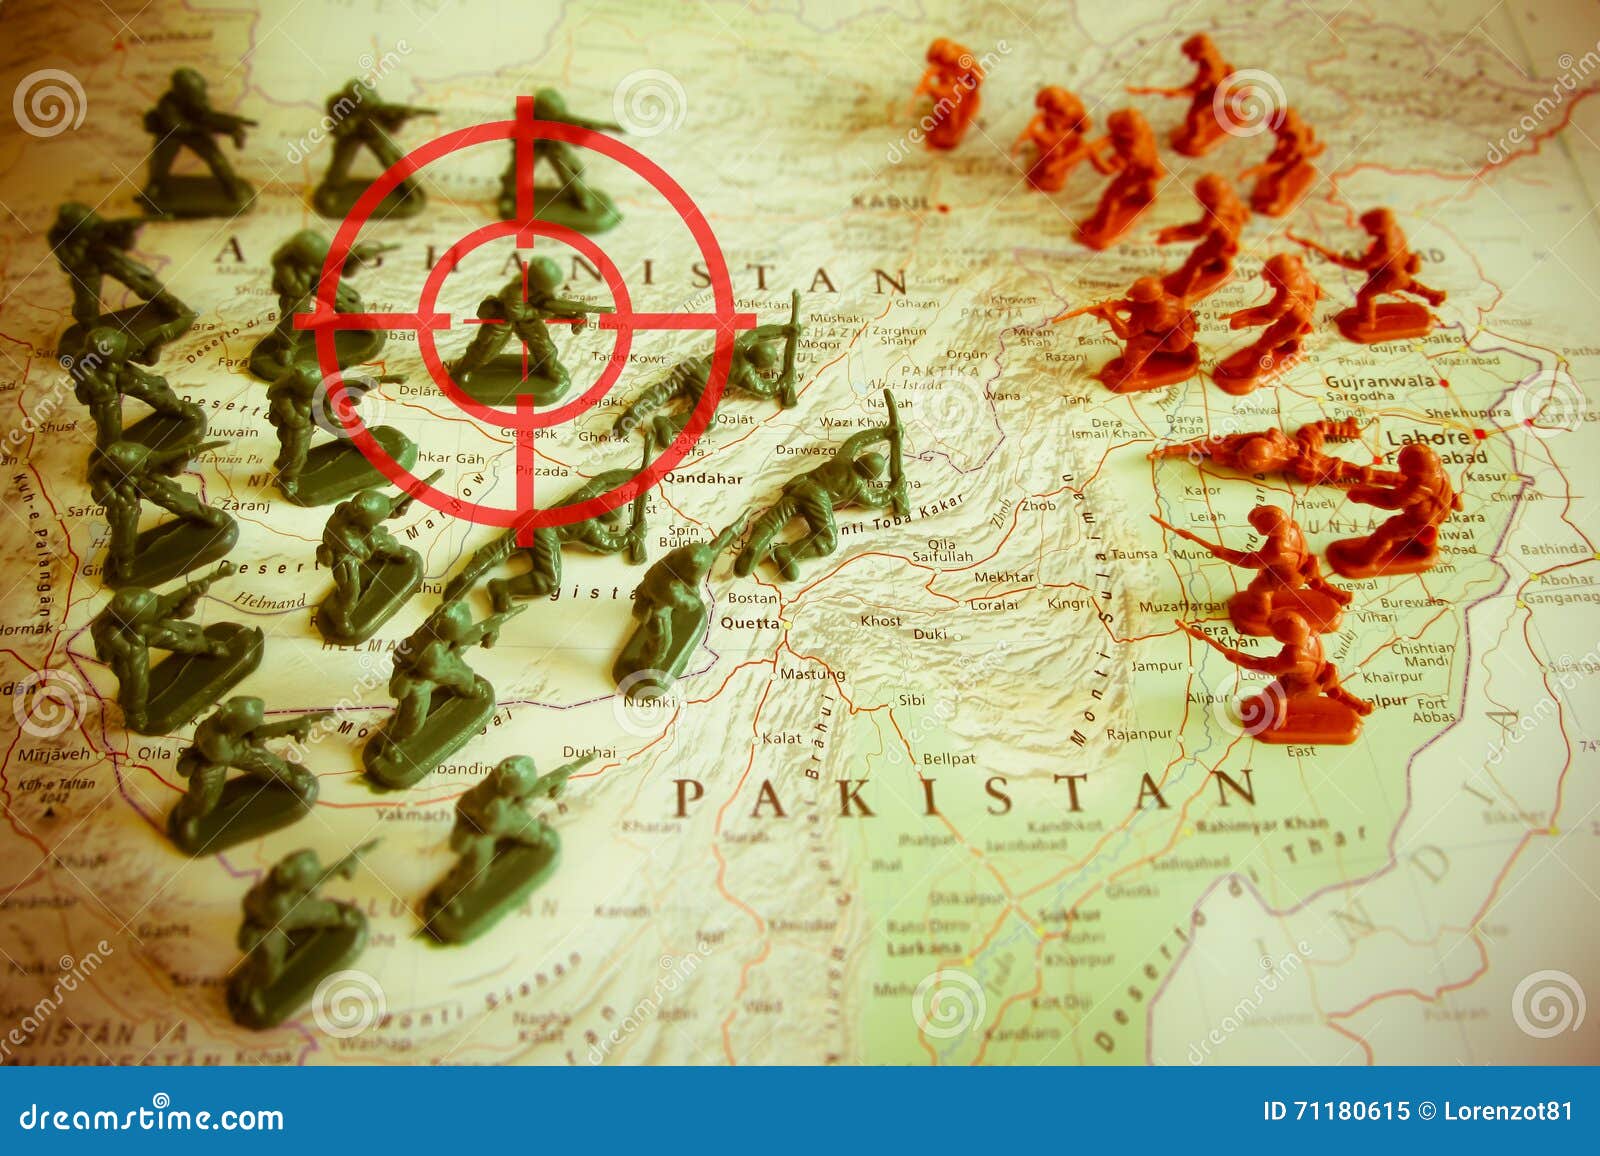 red viewfinder over rebels on afganistan territory: focus on afganistan conflict